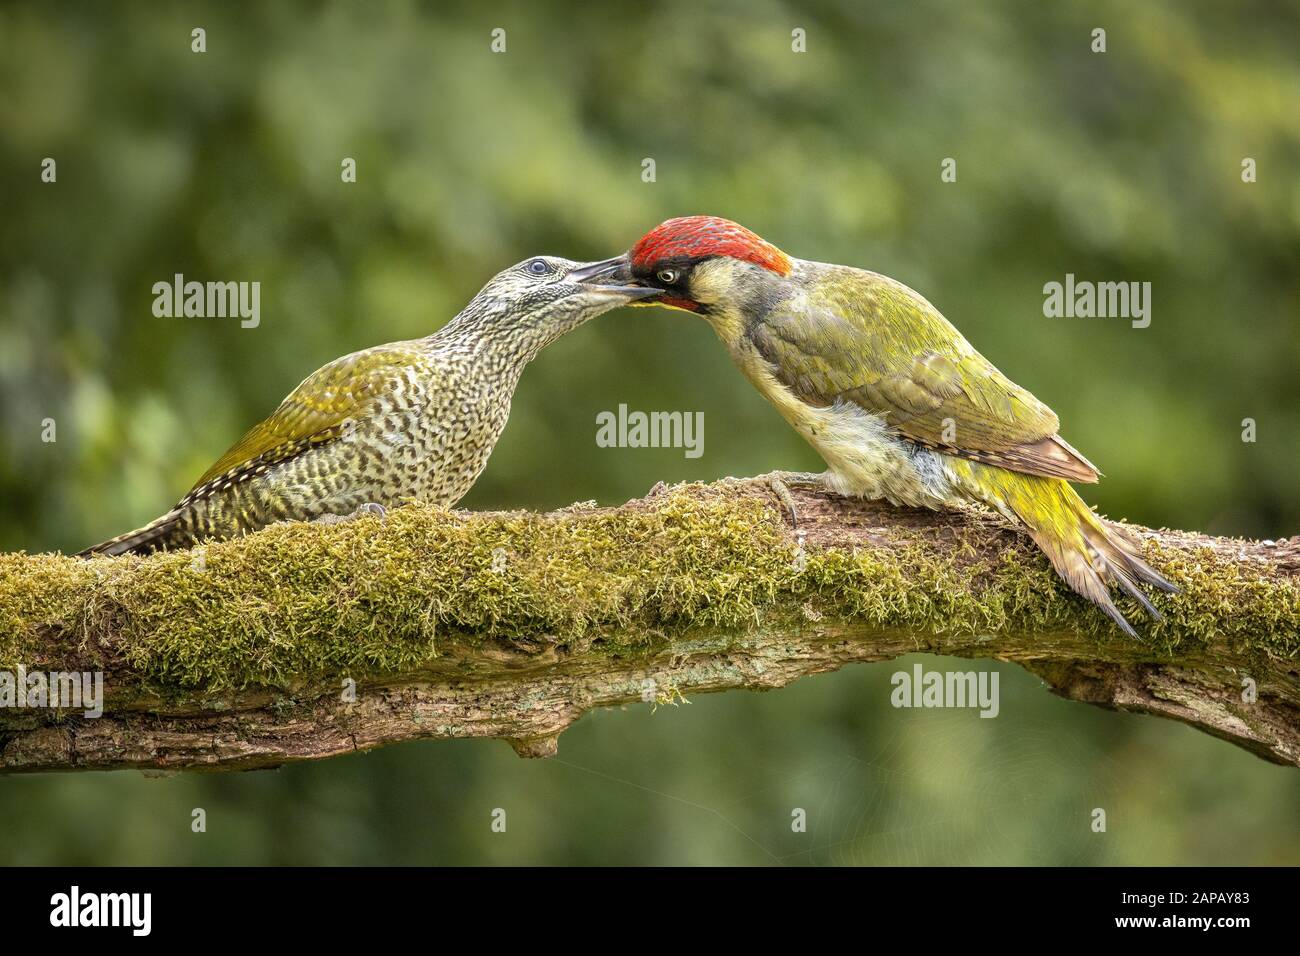 Feeding Green Juvenile Woodpecker Wildlife on branch UK Nature Stock Photo